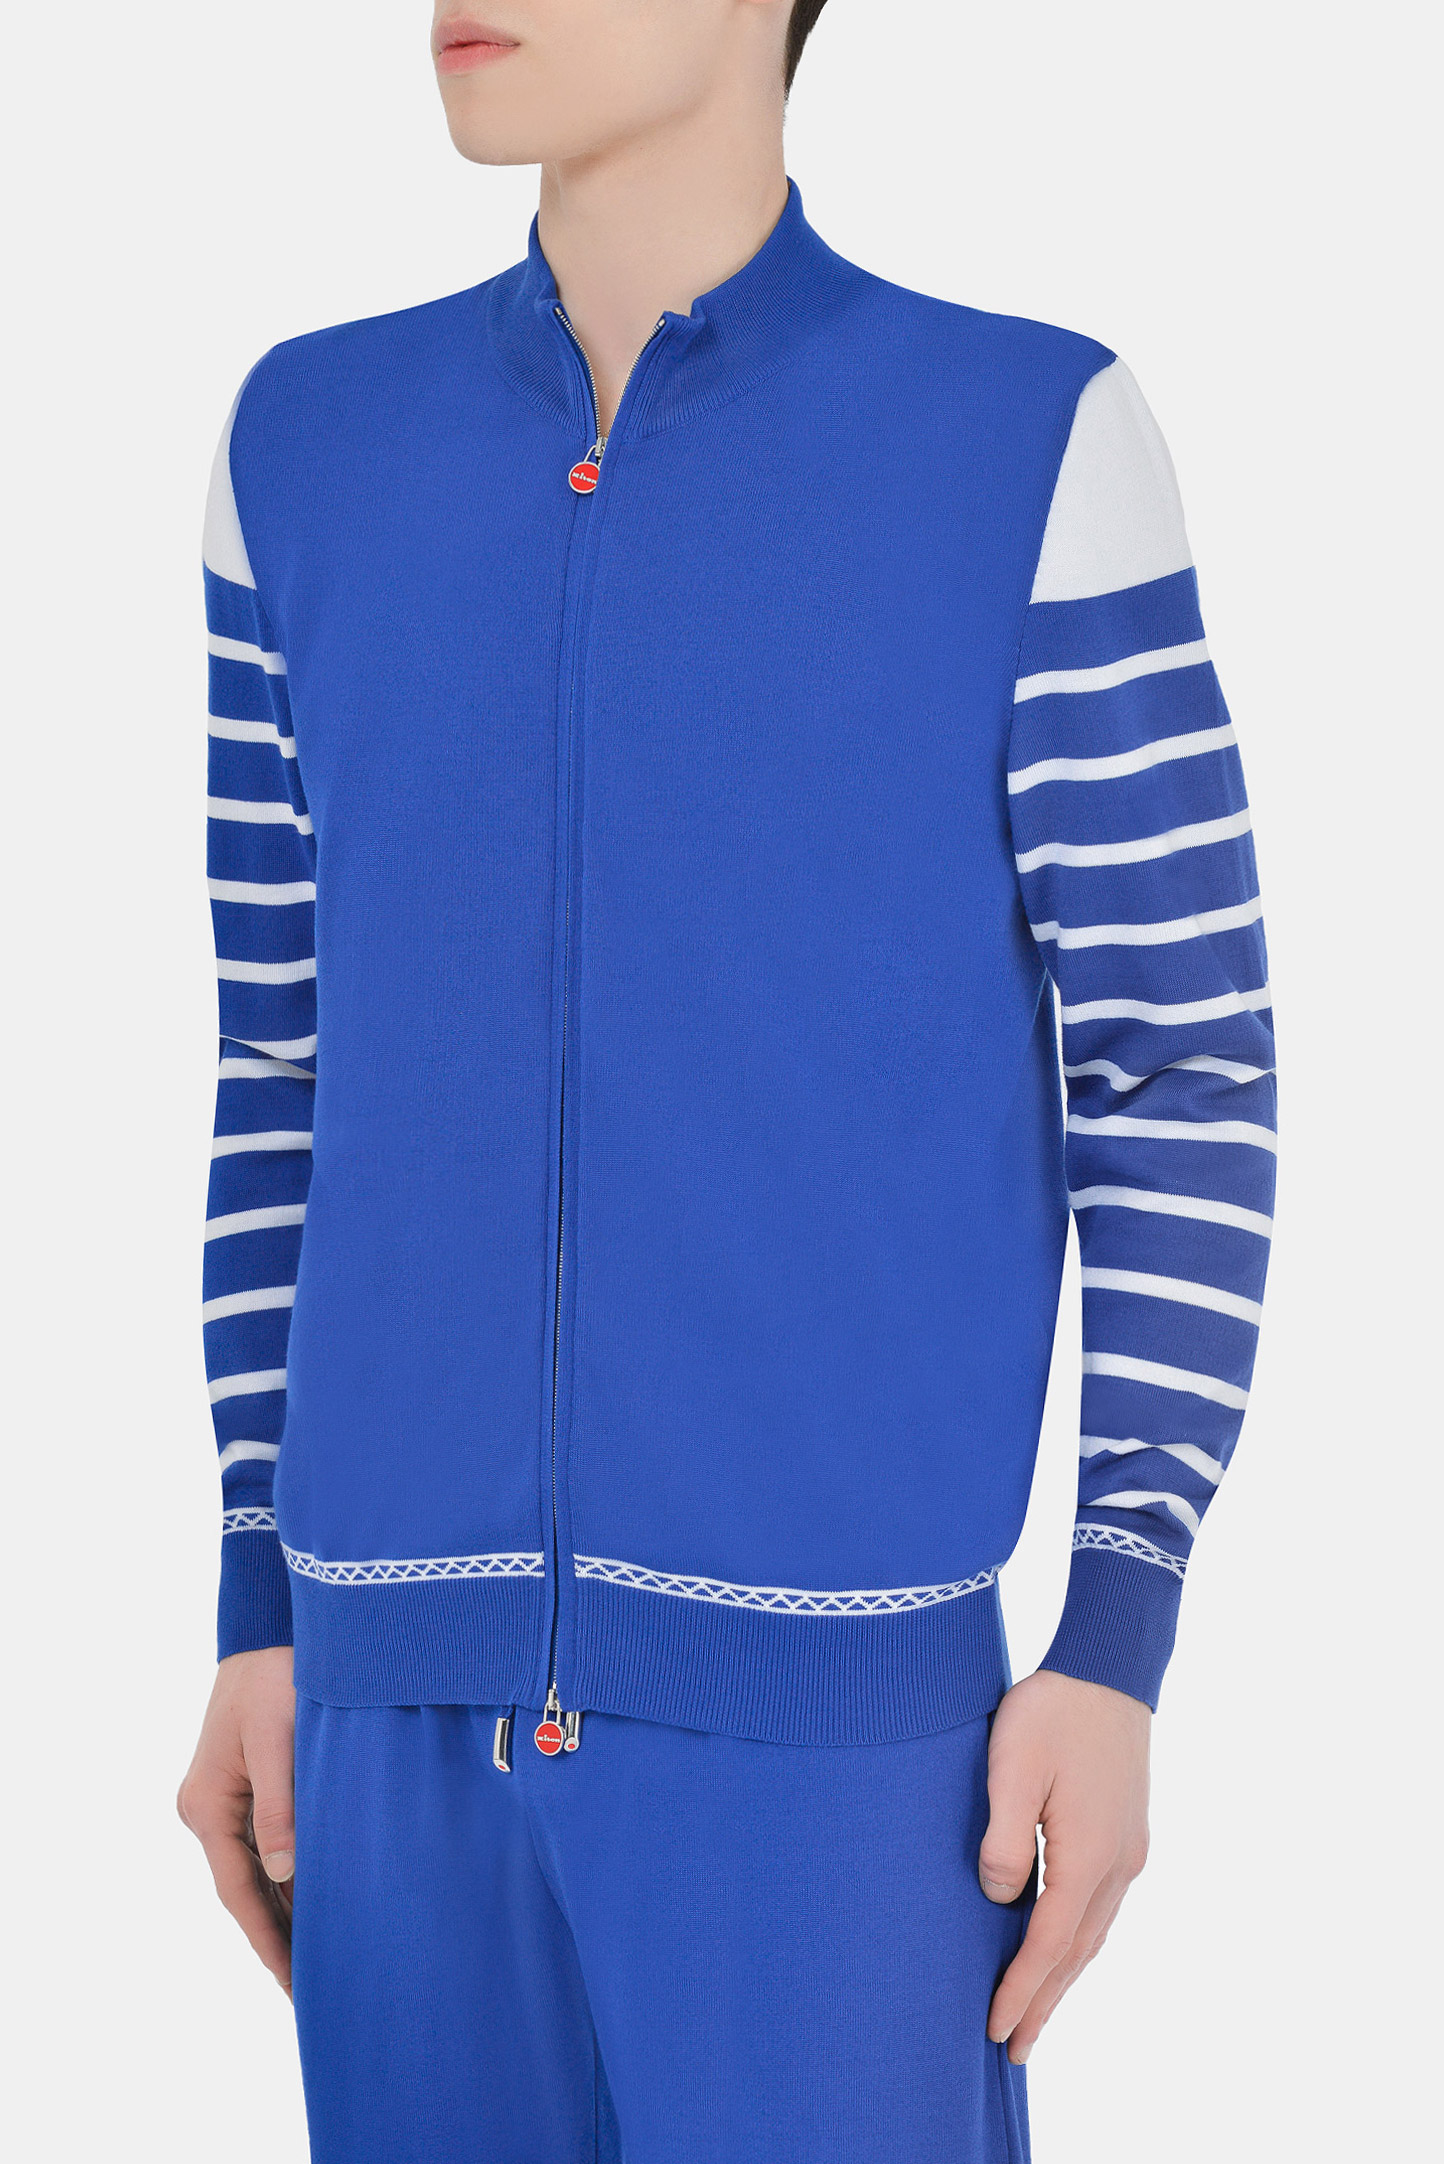 Куртка спорт KITON UK1260E21V24, цвет: Синий, Мужской